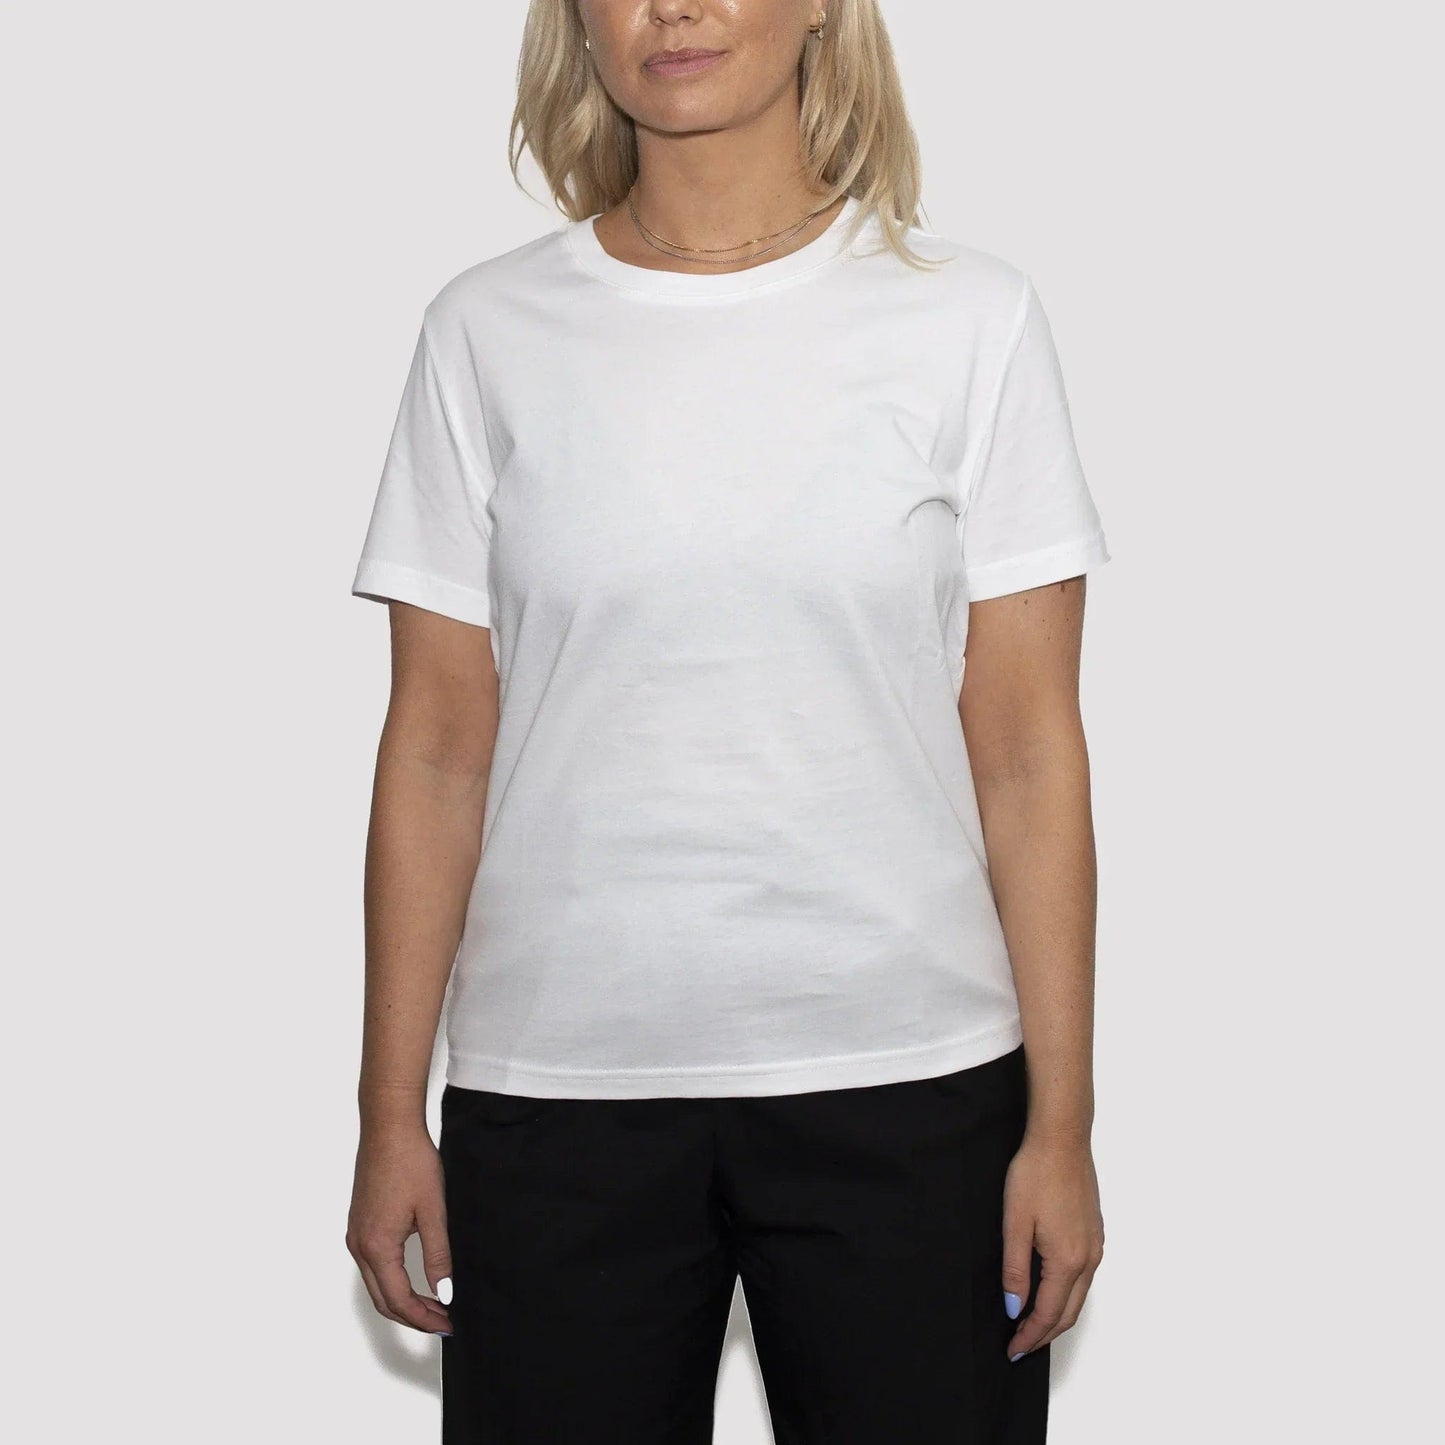 3er-Pack | Damen-T-Shirts, recycelte Baumwolle, Weiß